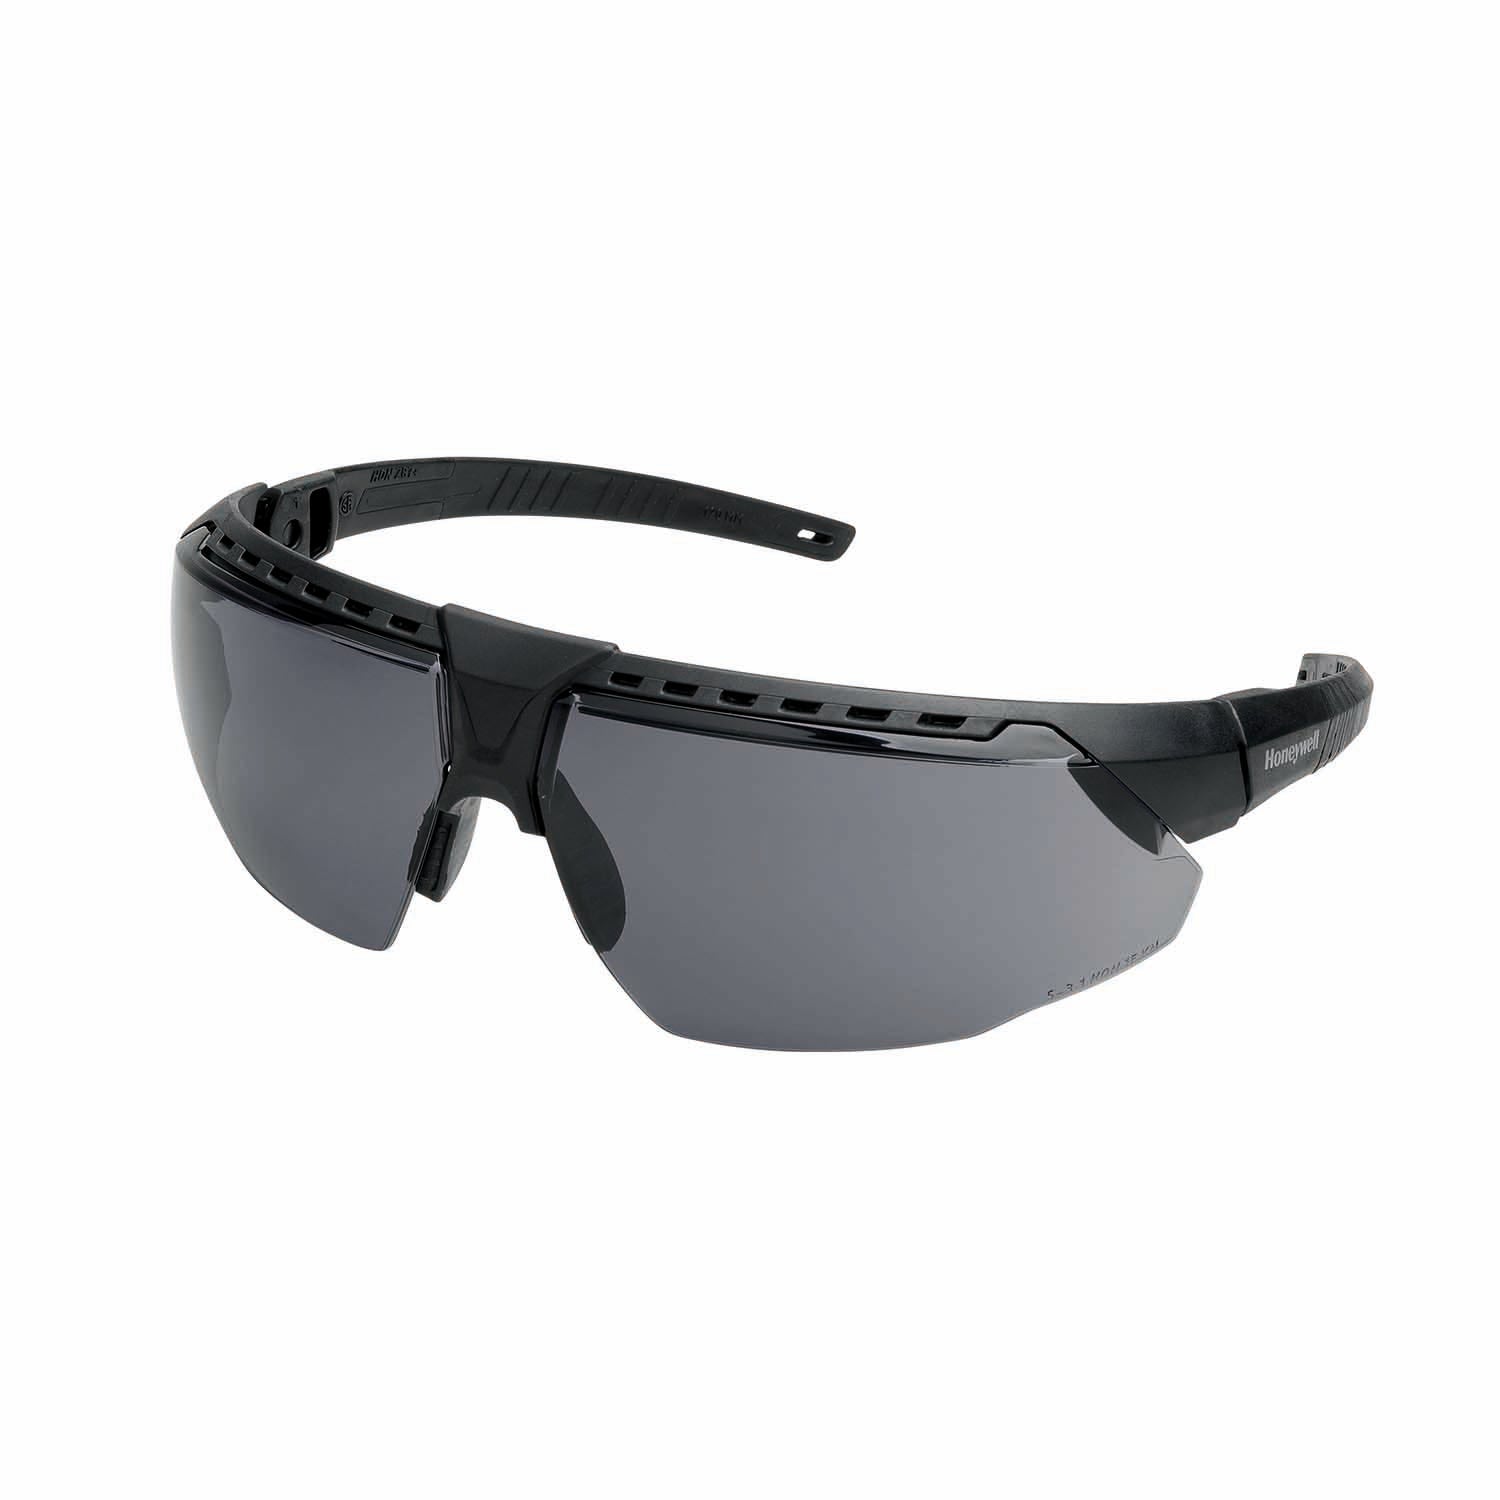 Honeywell AVATAR Safety Glasses Black Frame Grey Lens